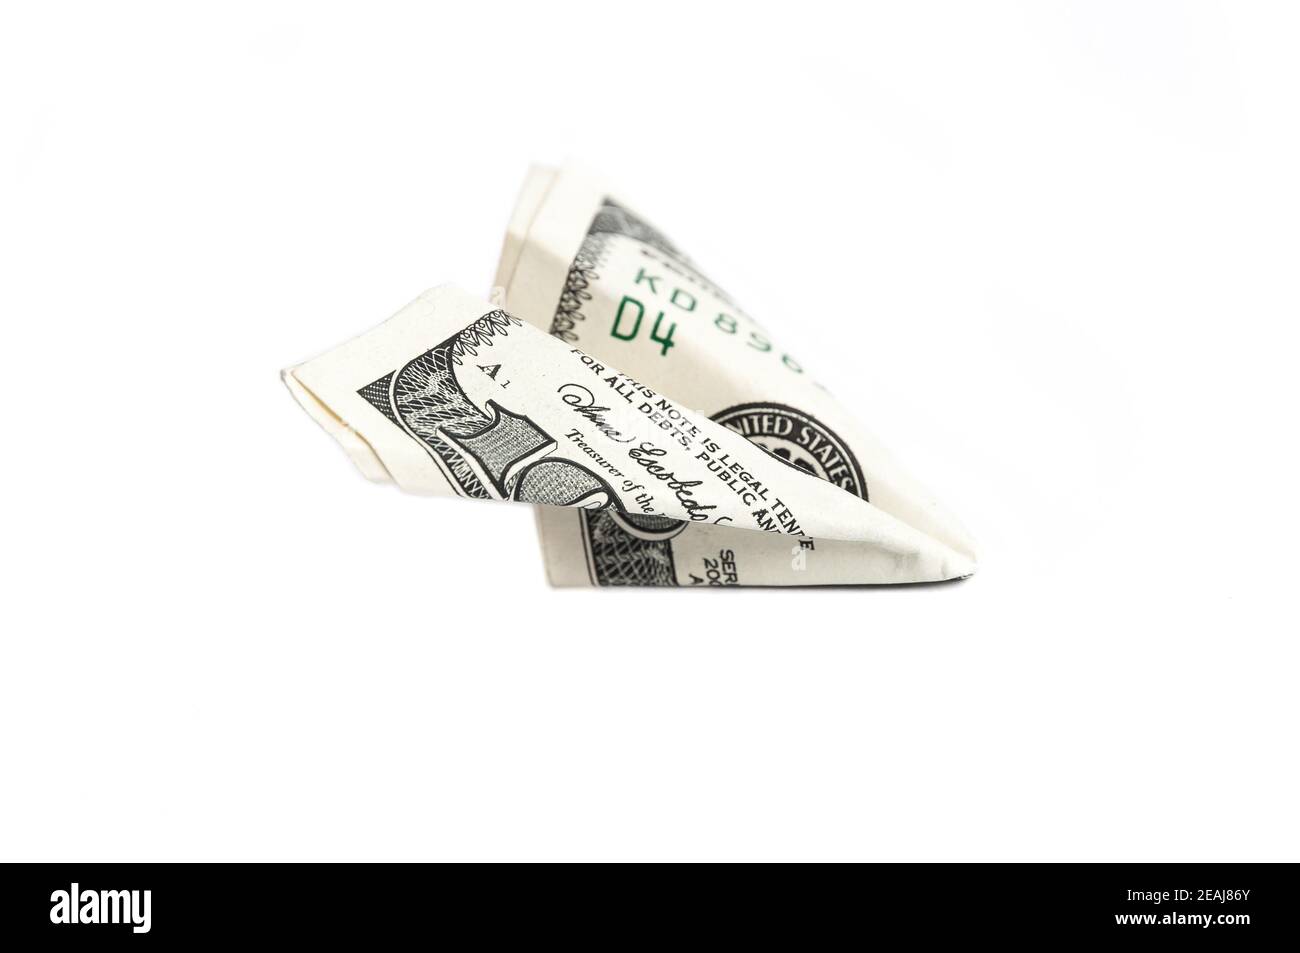 A Money Bag And Bundles Of Hundred-Dollar Bills Art Board Print